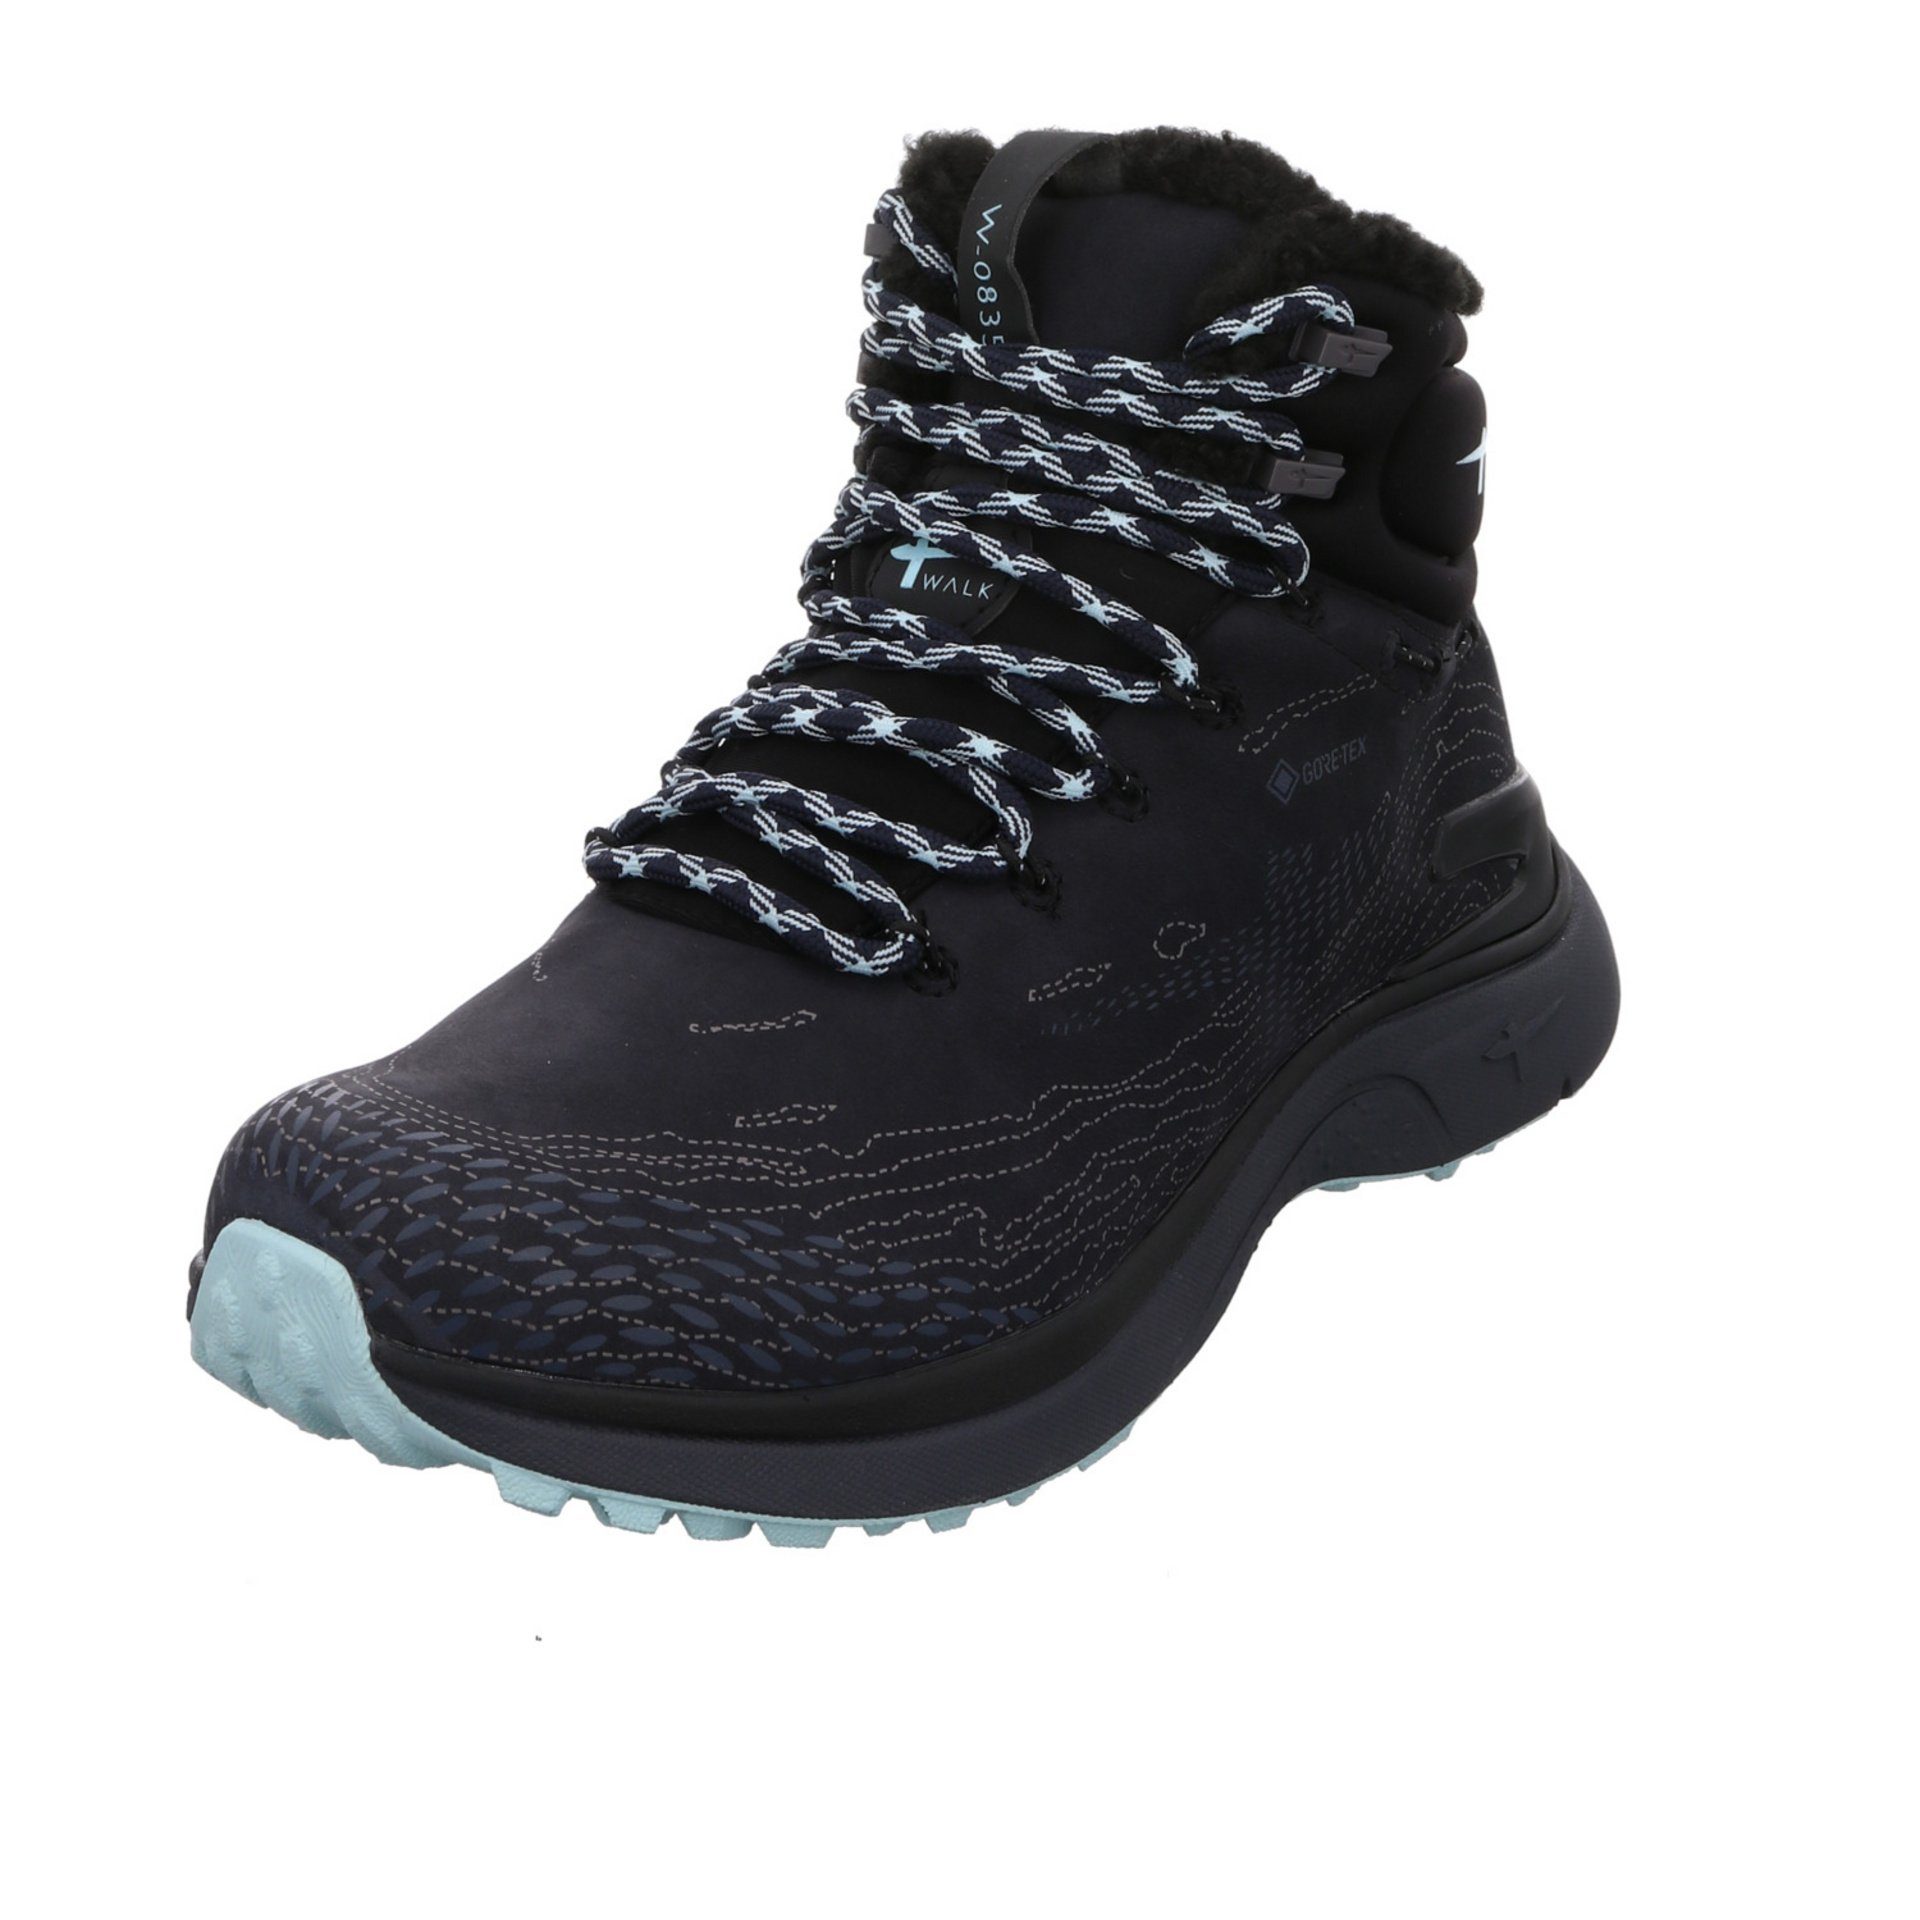 Tamaris Damen Schuhe Outdoor Gore-Tex Outdoorschuh Outdoorschuh Leder-/Textilkombination blau dunkel